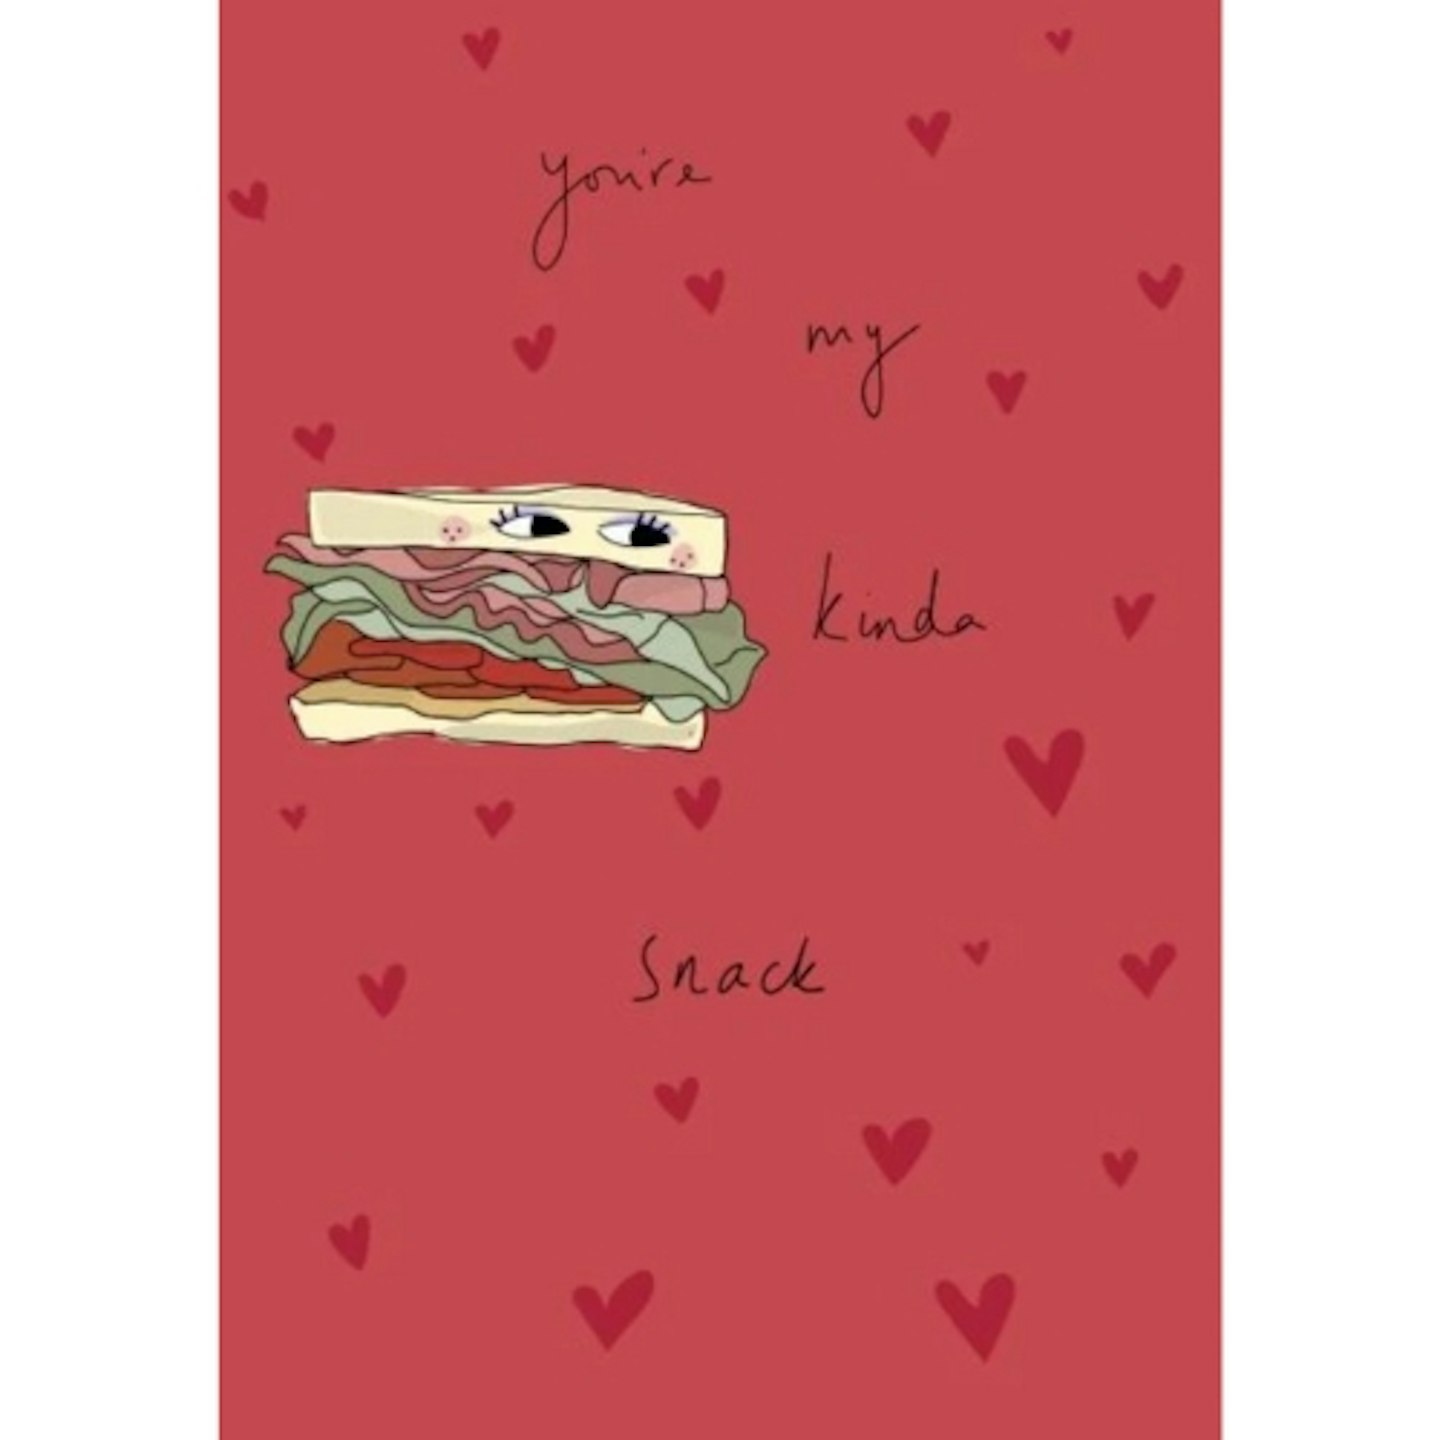 Thortful You're My Kinda Snack Card